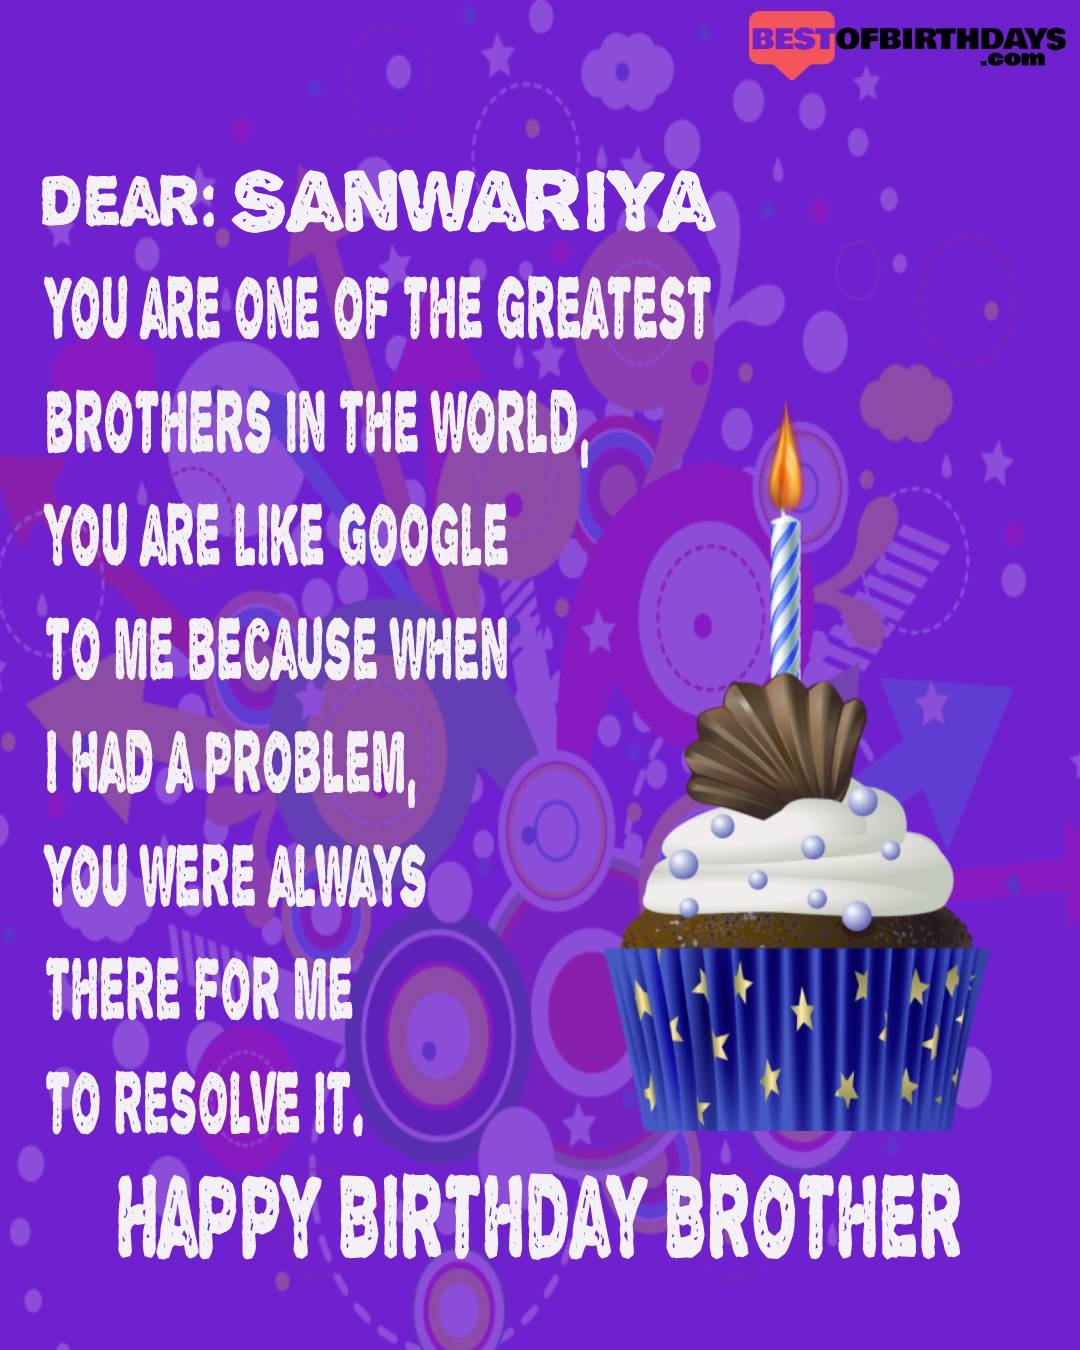 Happy birthday sanwariya bhai brother bro